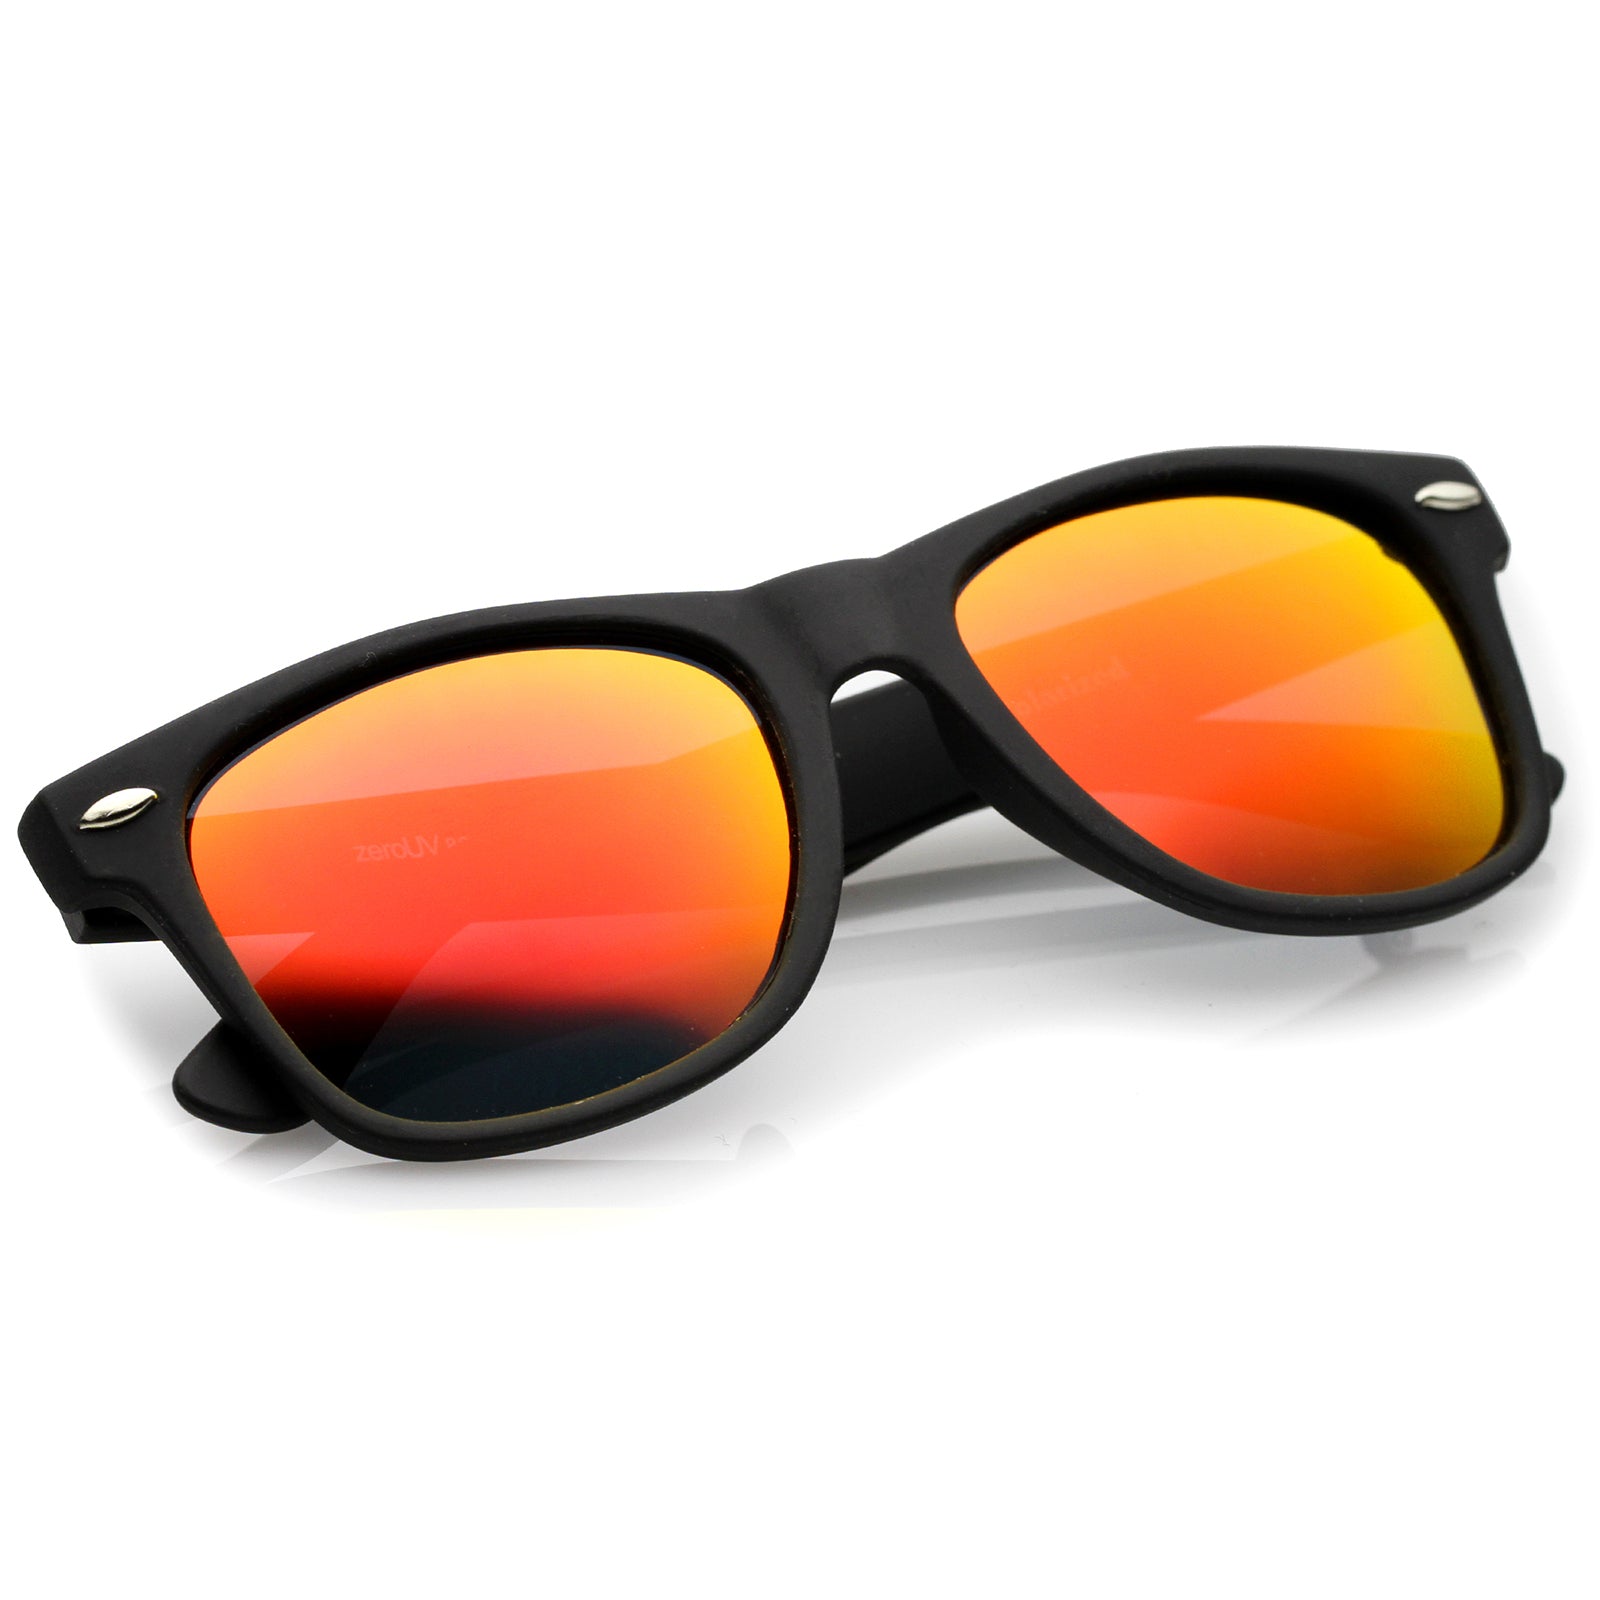 Newin & Co. Wayfarer Sunglasses - Black Lens